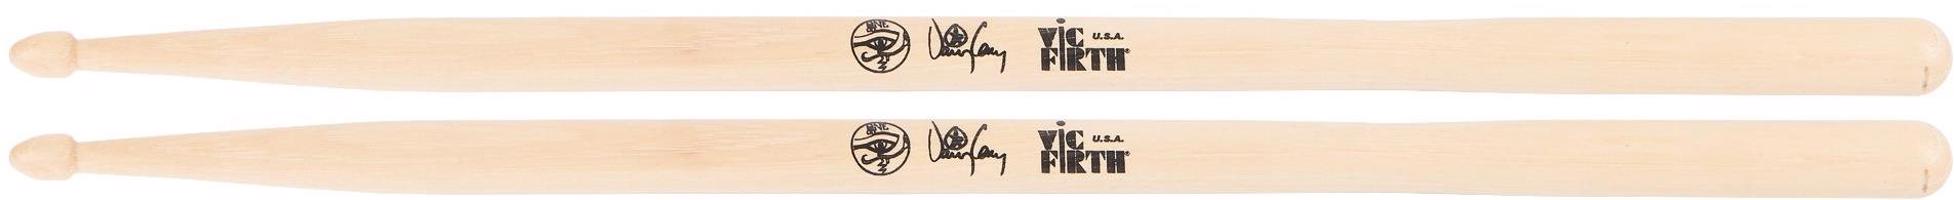 VIC FIRTH Danny Carey Signature Series